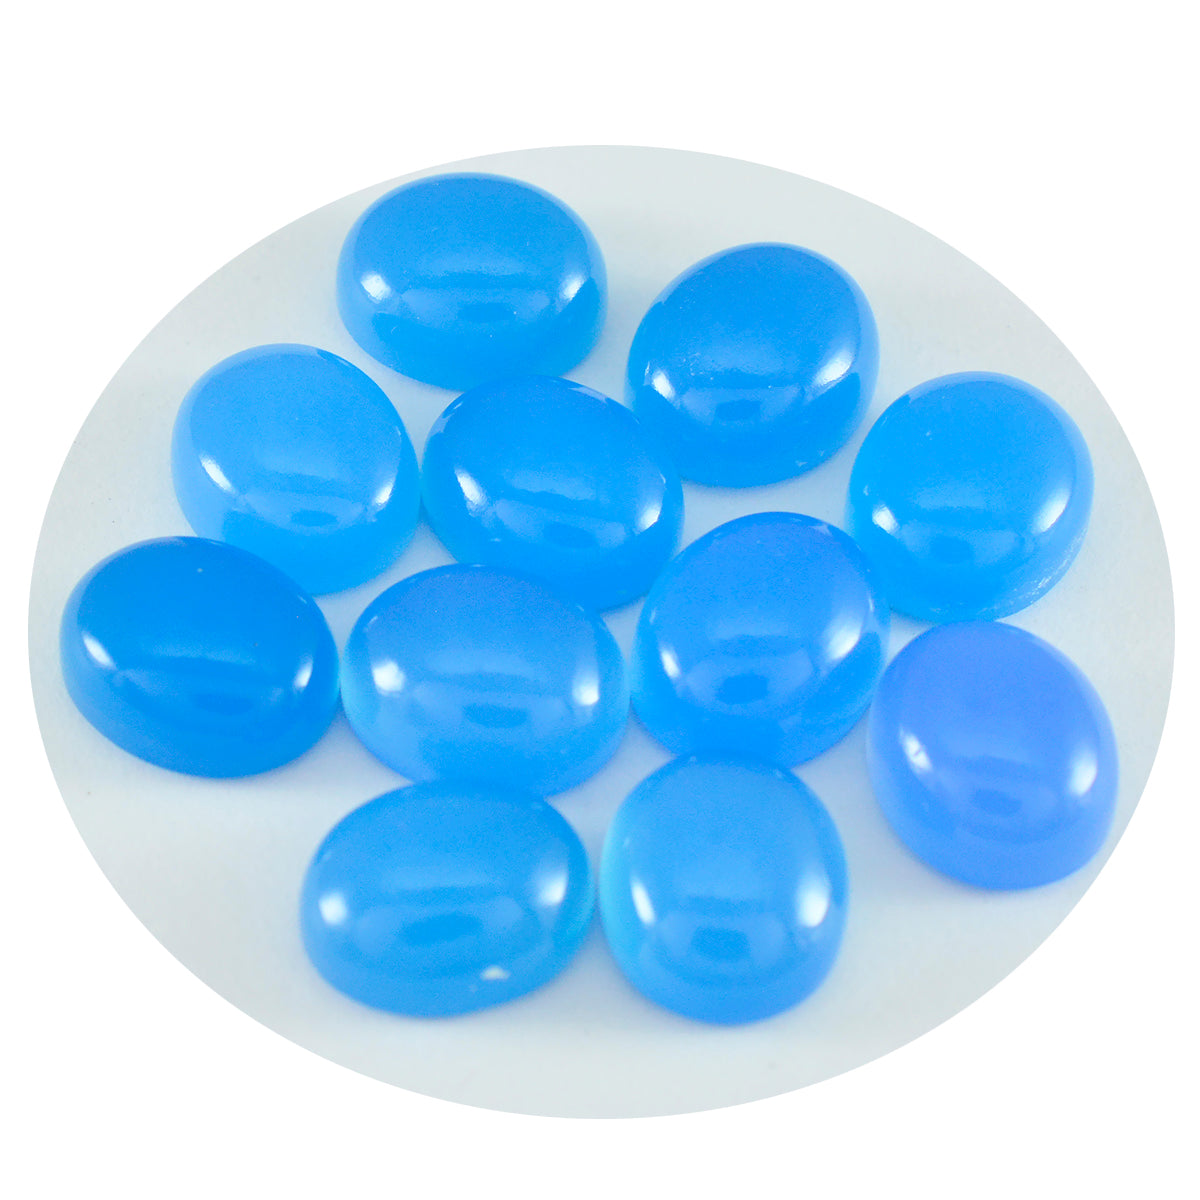 Riyogems 1PC Blue Chalcedony Cabochon 5x7 mm Oval Shape startling Quality Gemstone